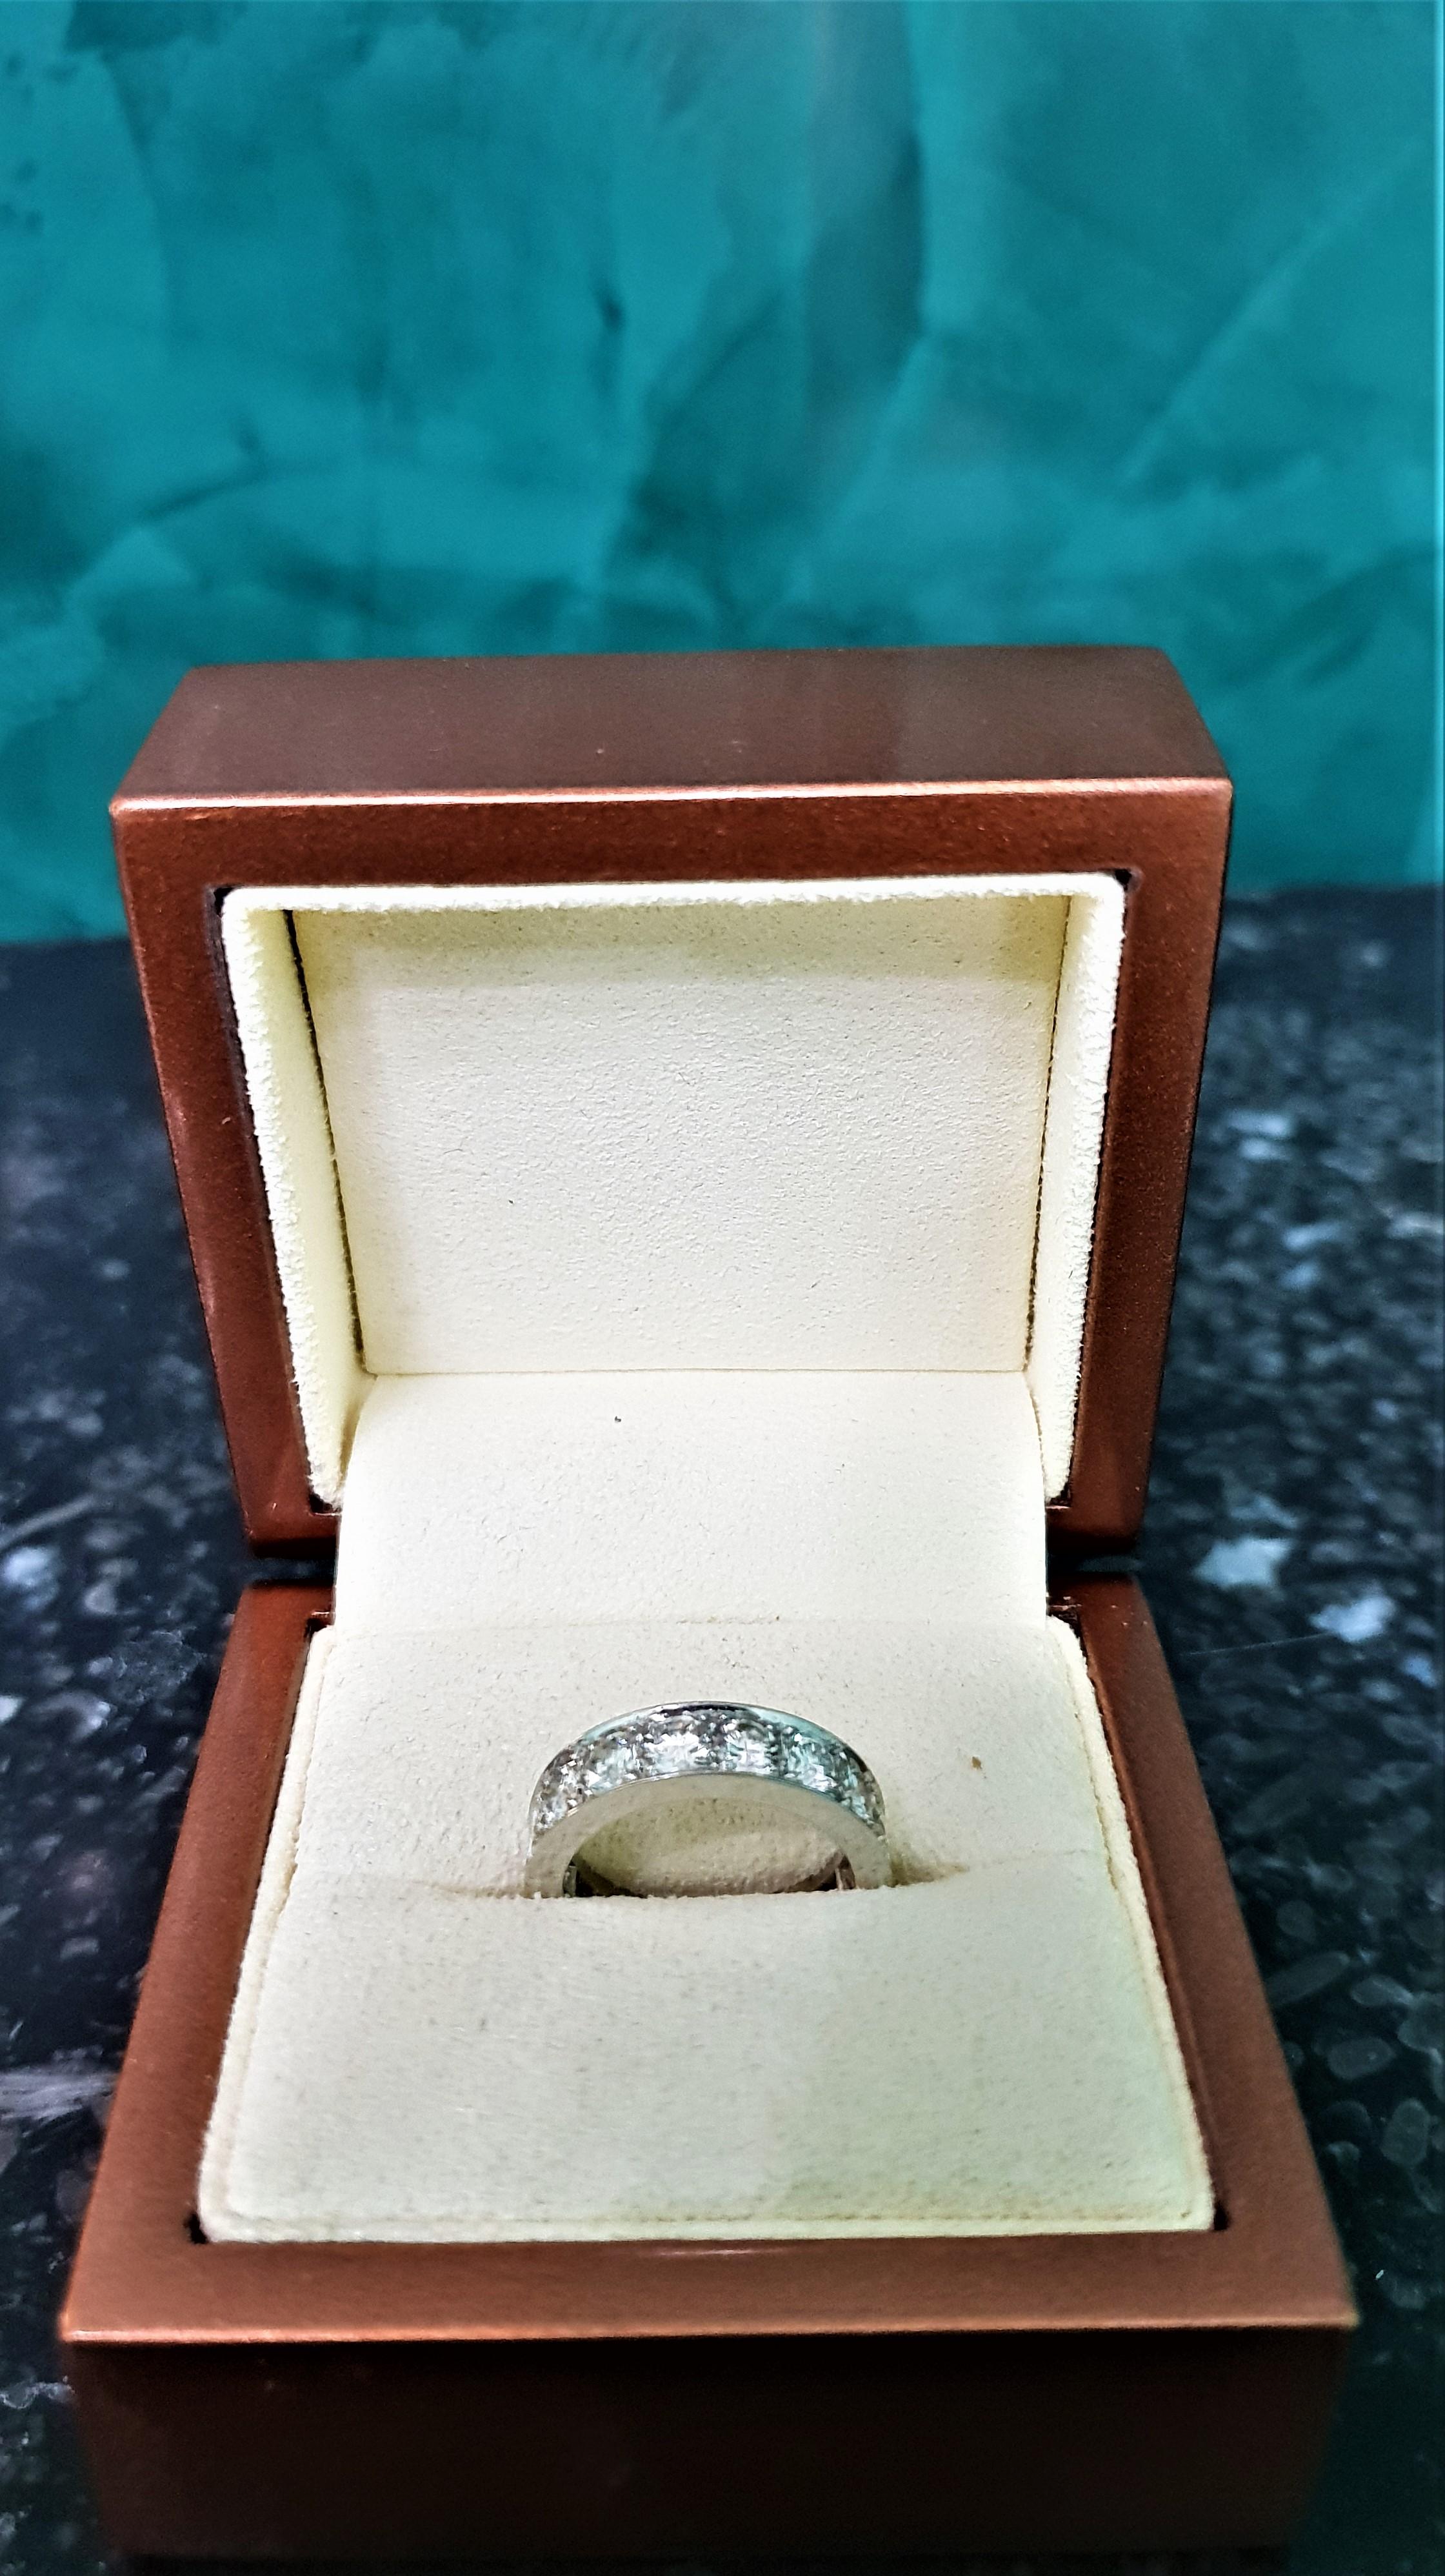 Elegant engagement ring white 18k gold and diamonds.
3.20 carat total round diamonds, G colour, Vvs purity. 
Size: 8 (Italy) -  4.5 (USA)